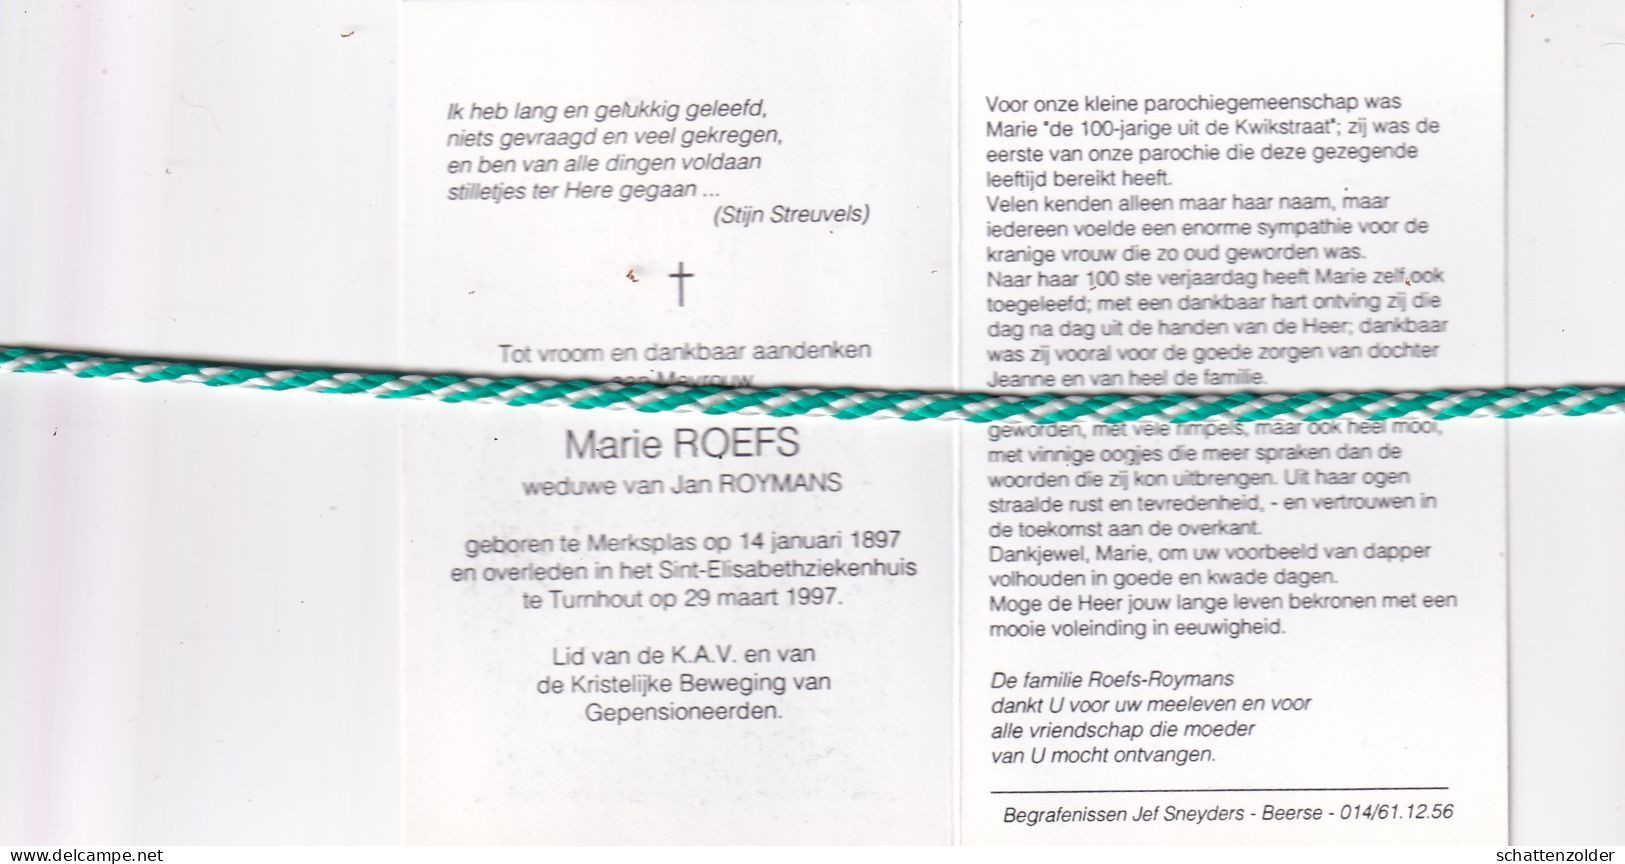 Maria Roefs-Roymans, Merksplas 1897, Turnhout 1997. Honderdjarige. Foto - Décès